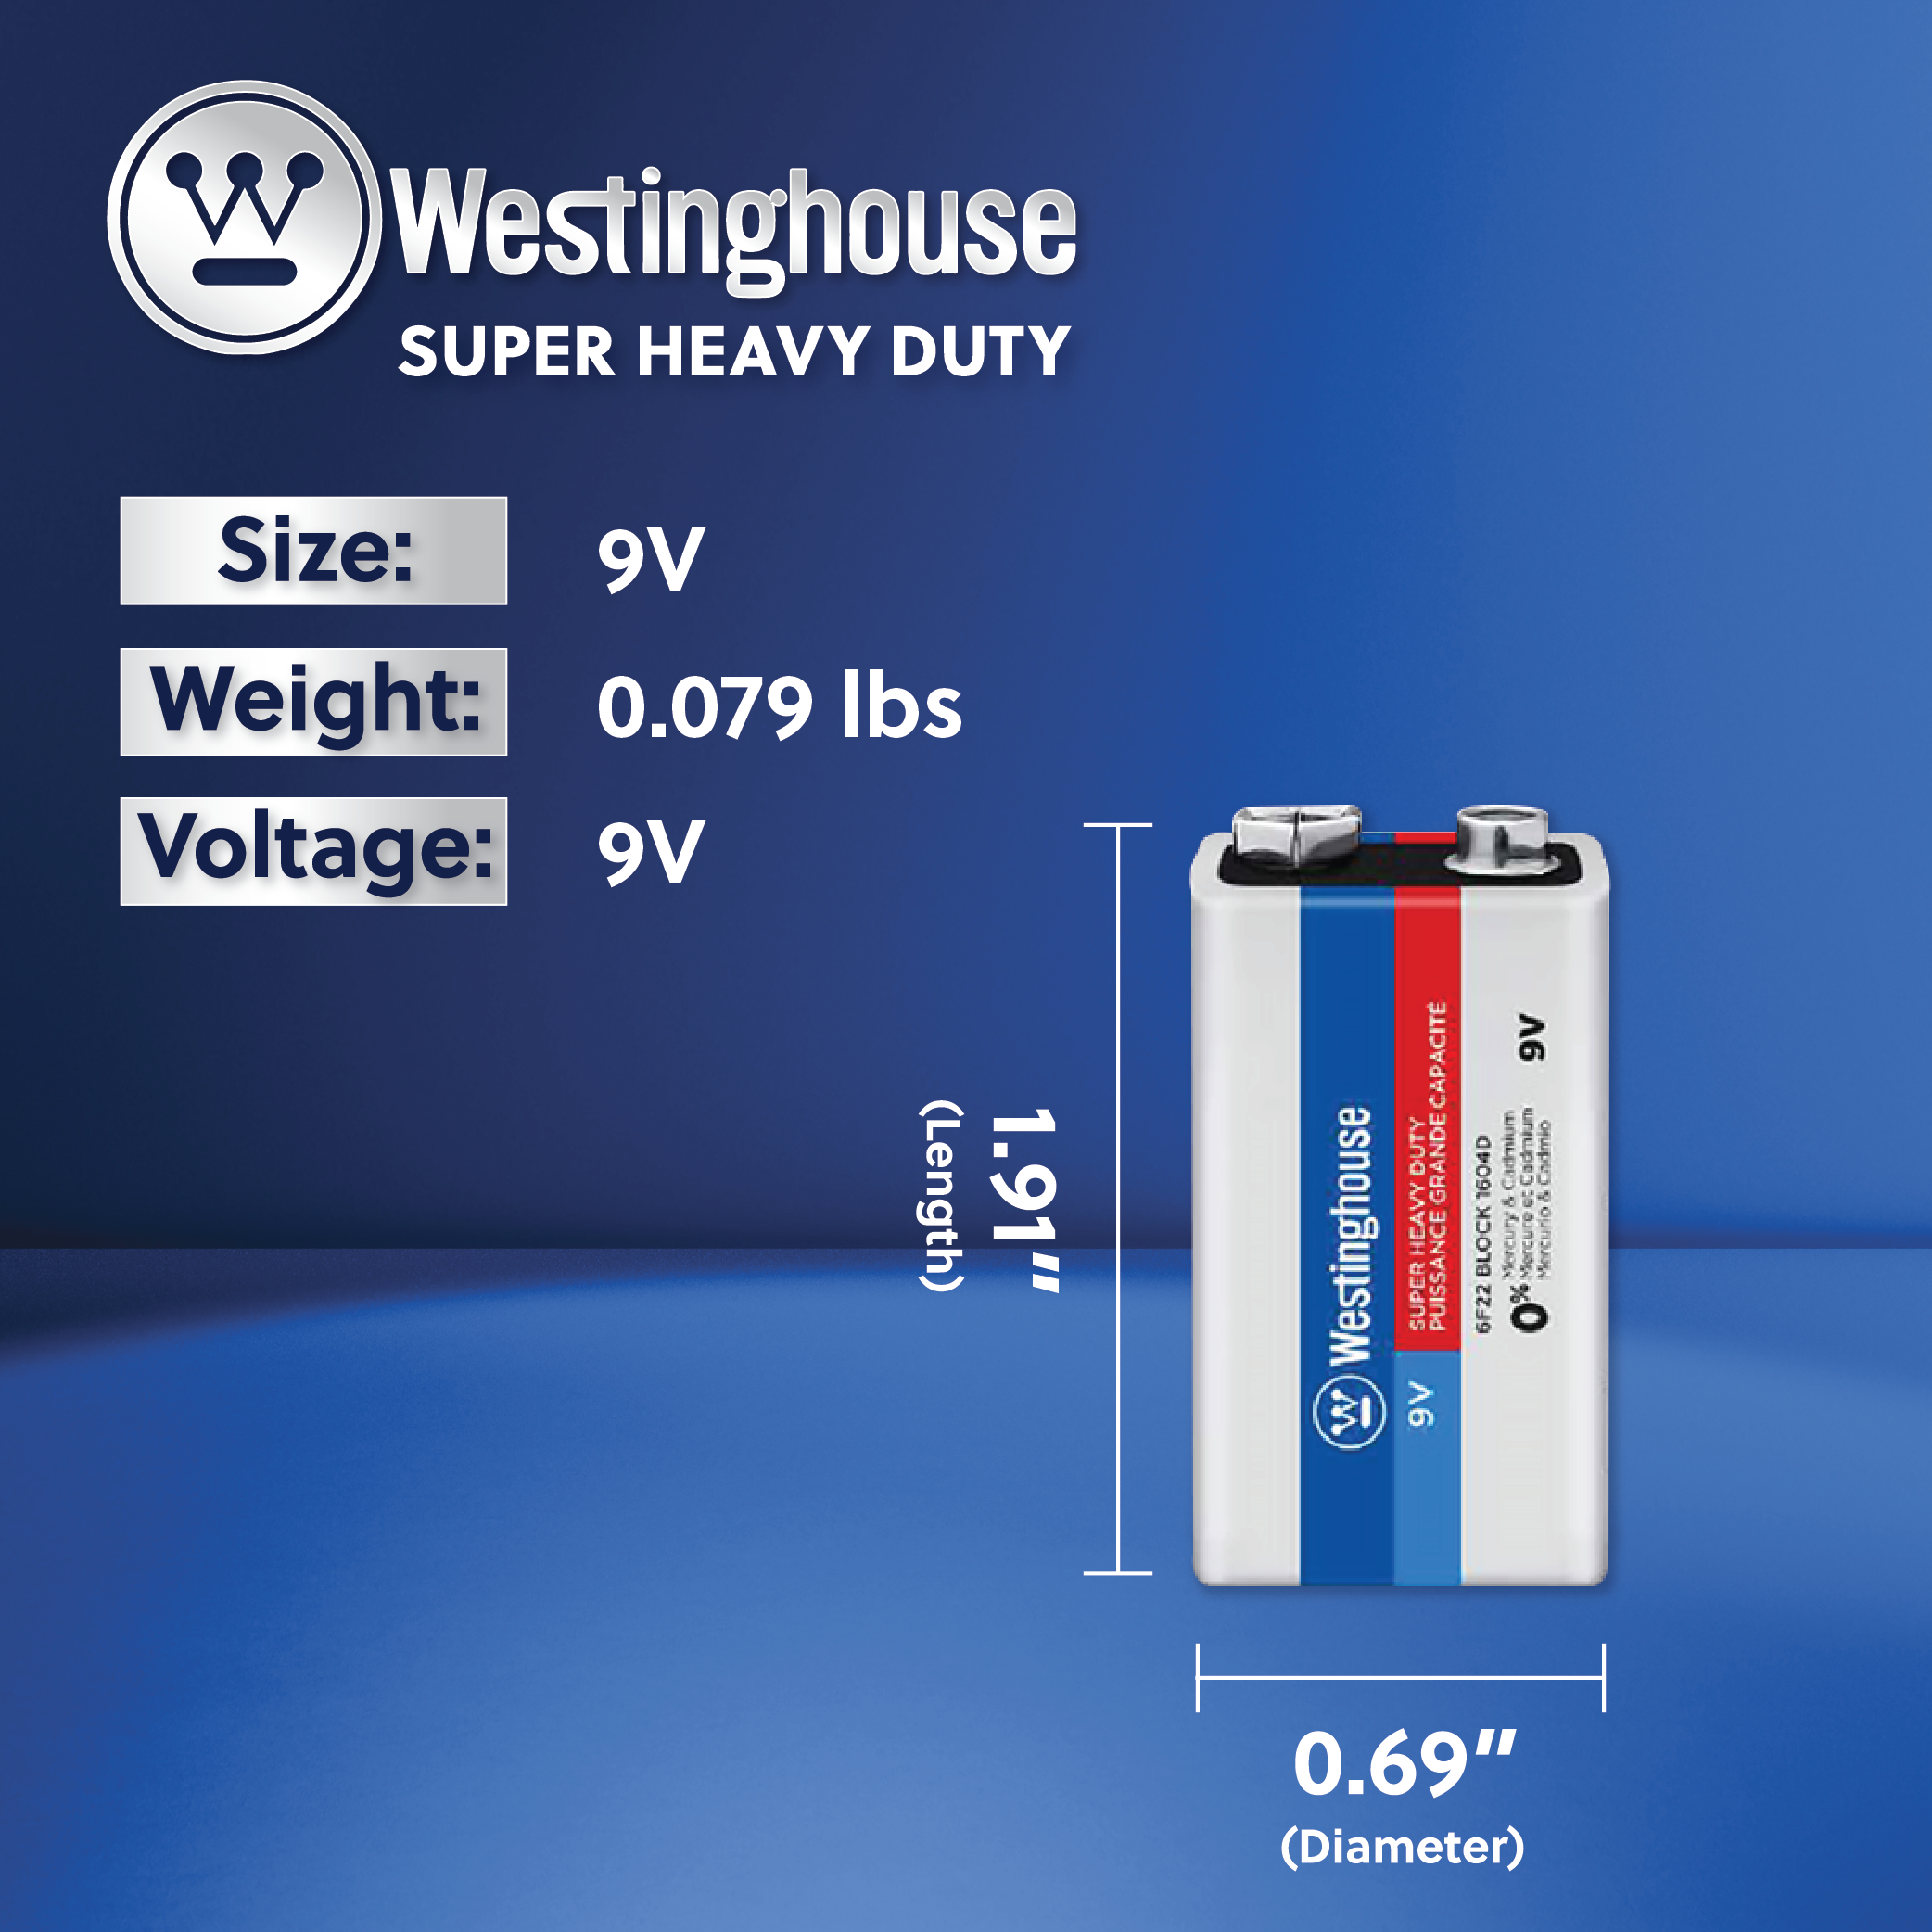 Westinghouse 9V Super Heavy Duty